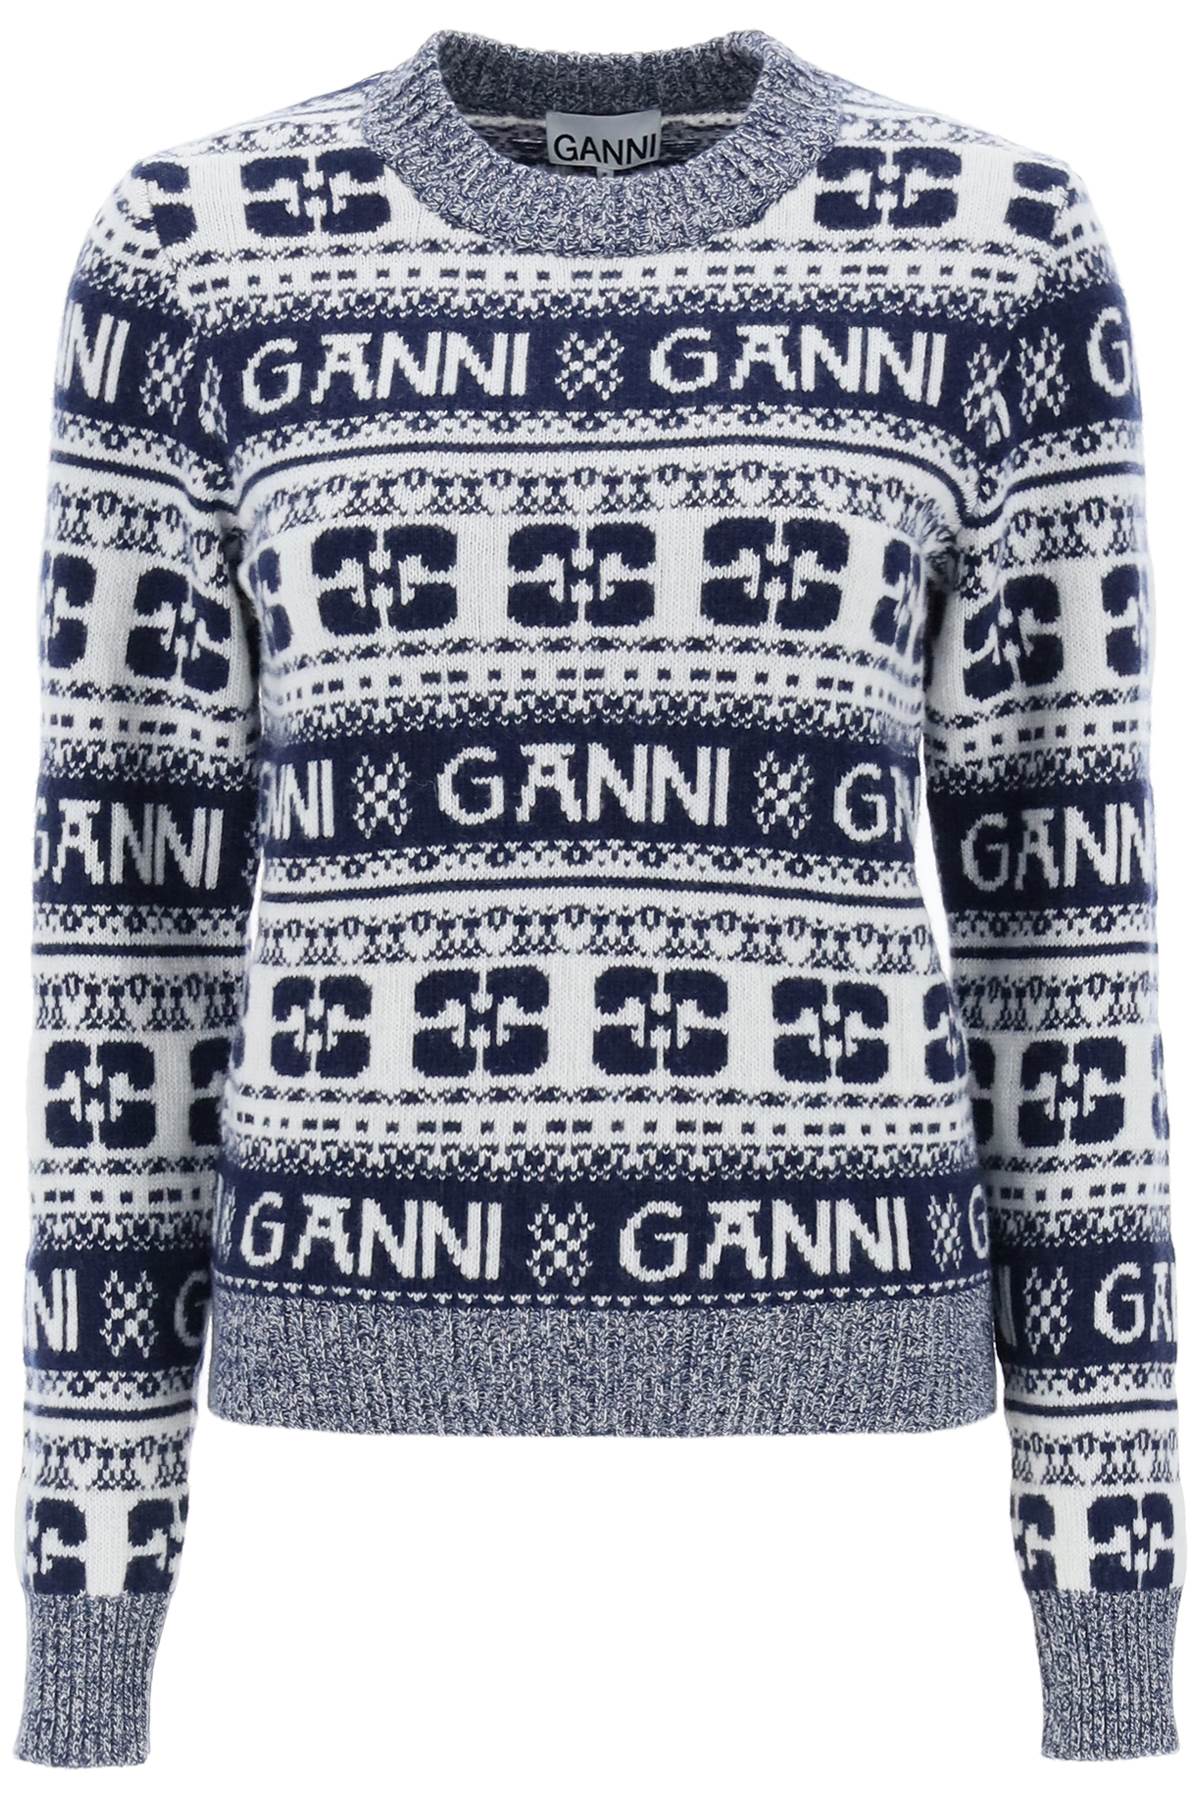 Ganni jacquard wool sweater with logo pattern-0